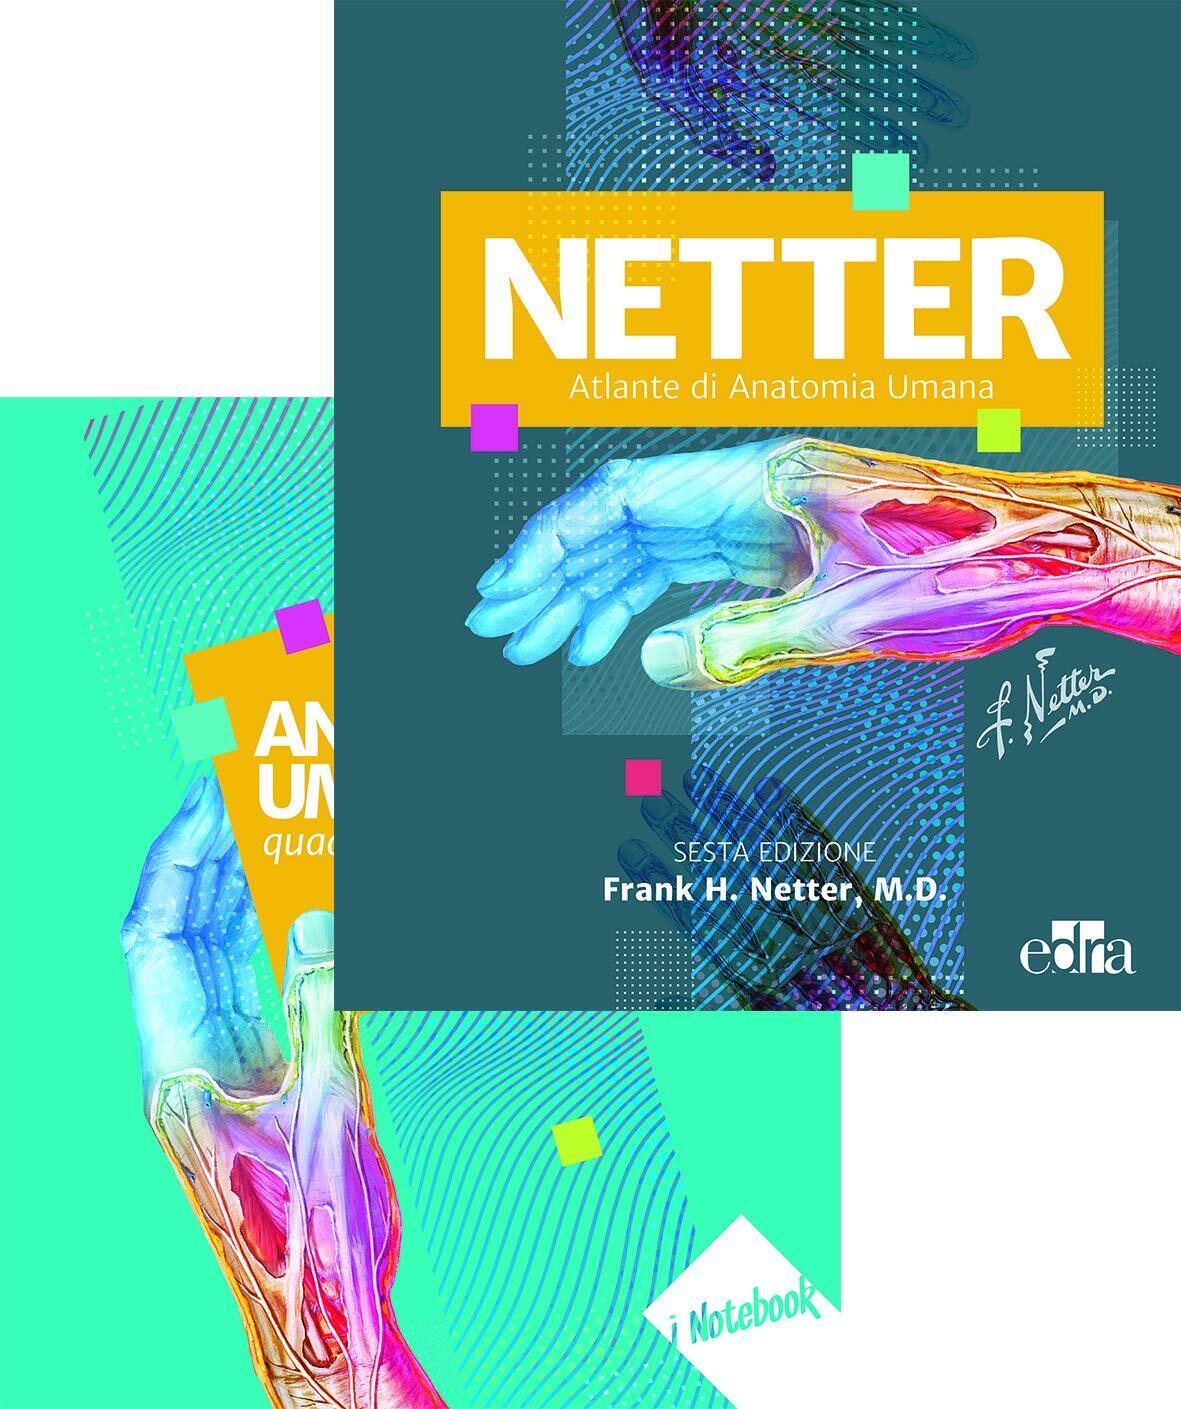 Netter. Atlante di anatomia umana - Frank H. Netter - Edra, 2019